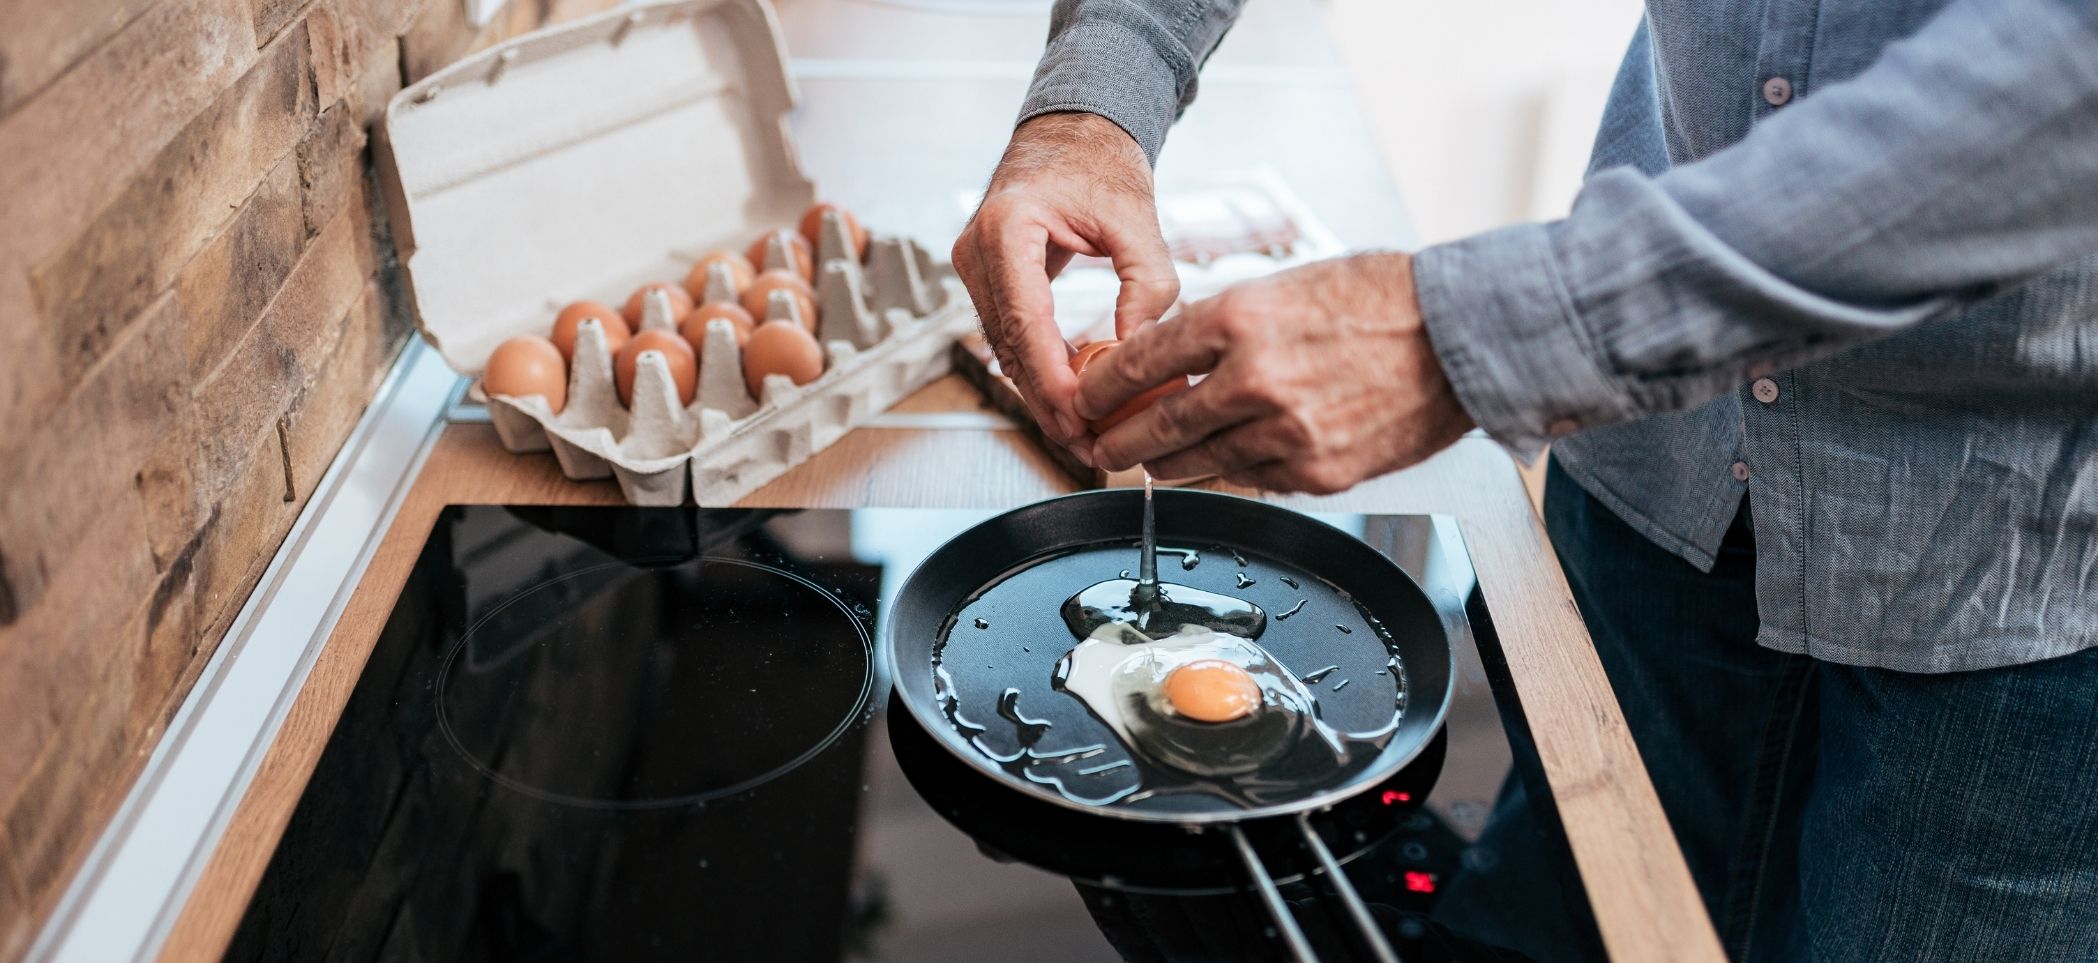 a man cracks an egg into a hot pan